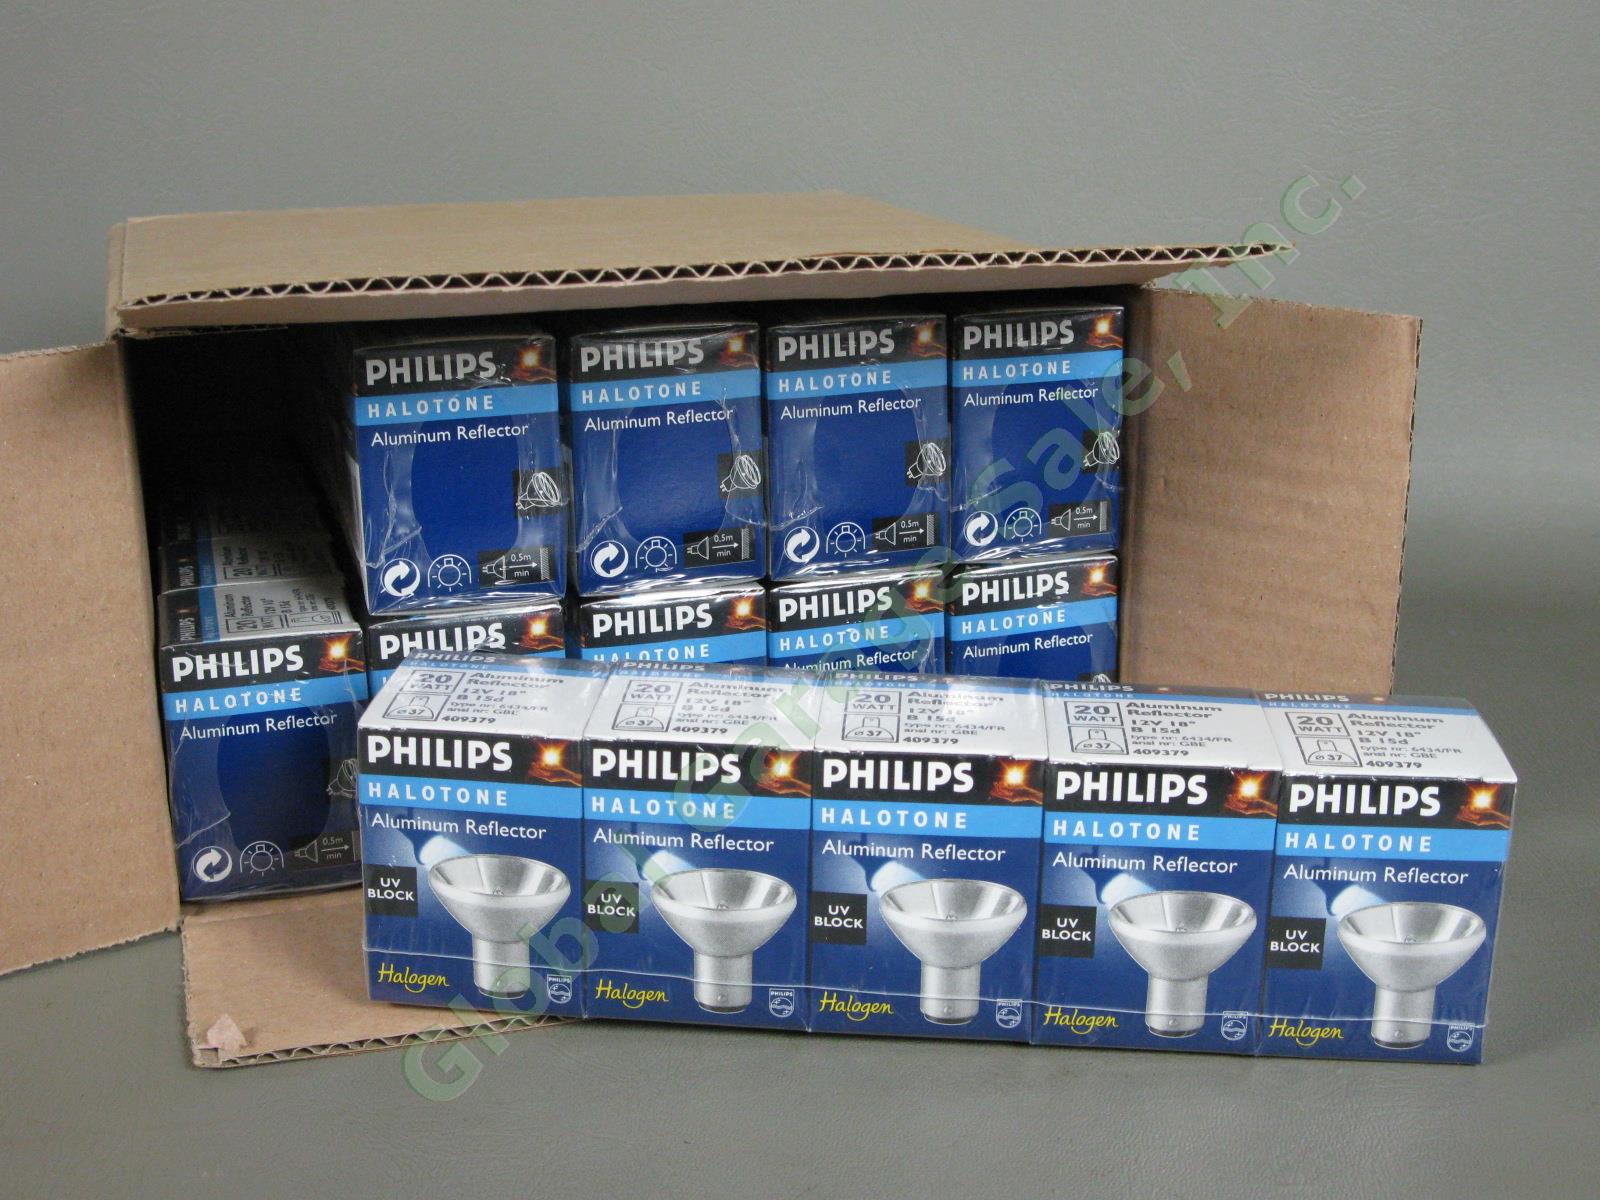 50 NEW Philips Halotone Light Bulb Lot 20w 12v UV Block 6434/FR Frosted 18° Set